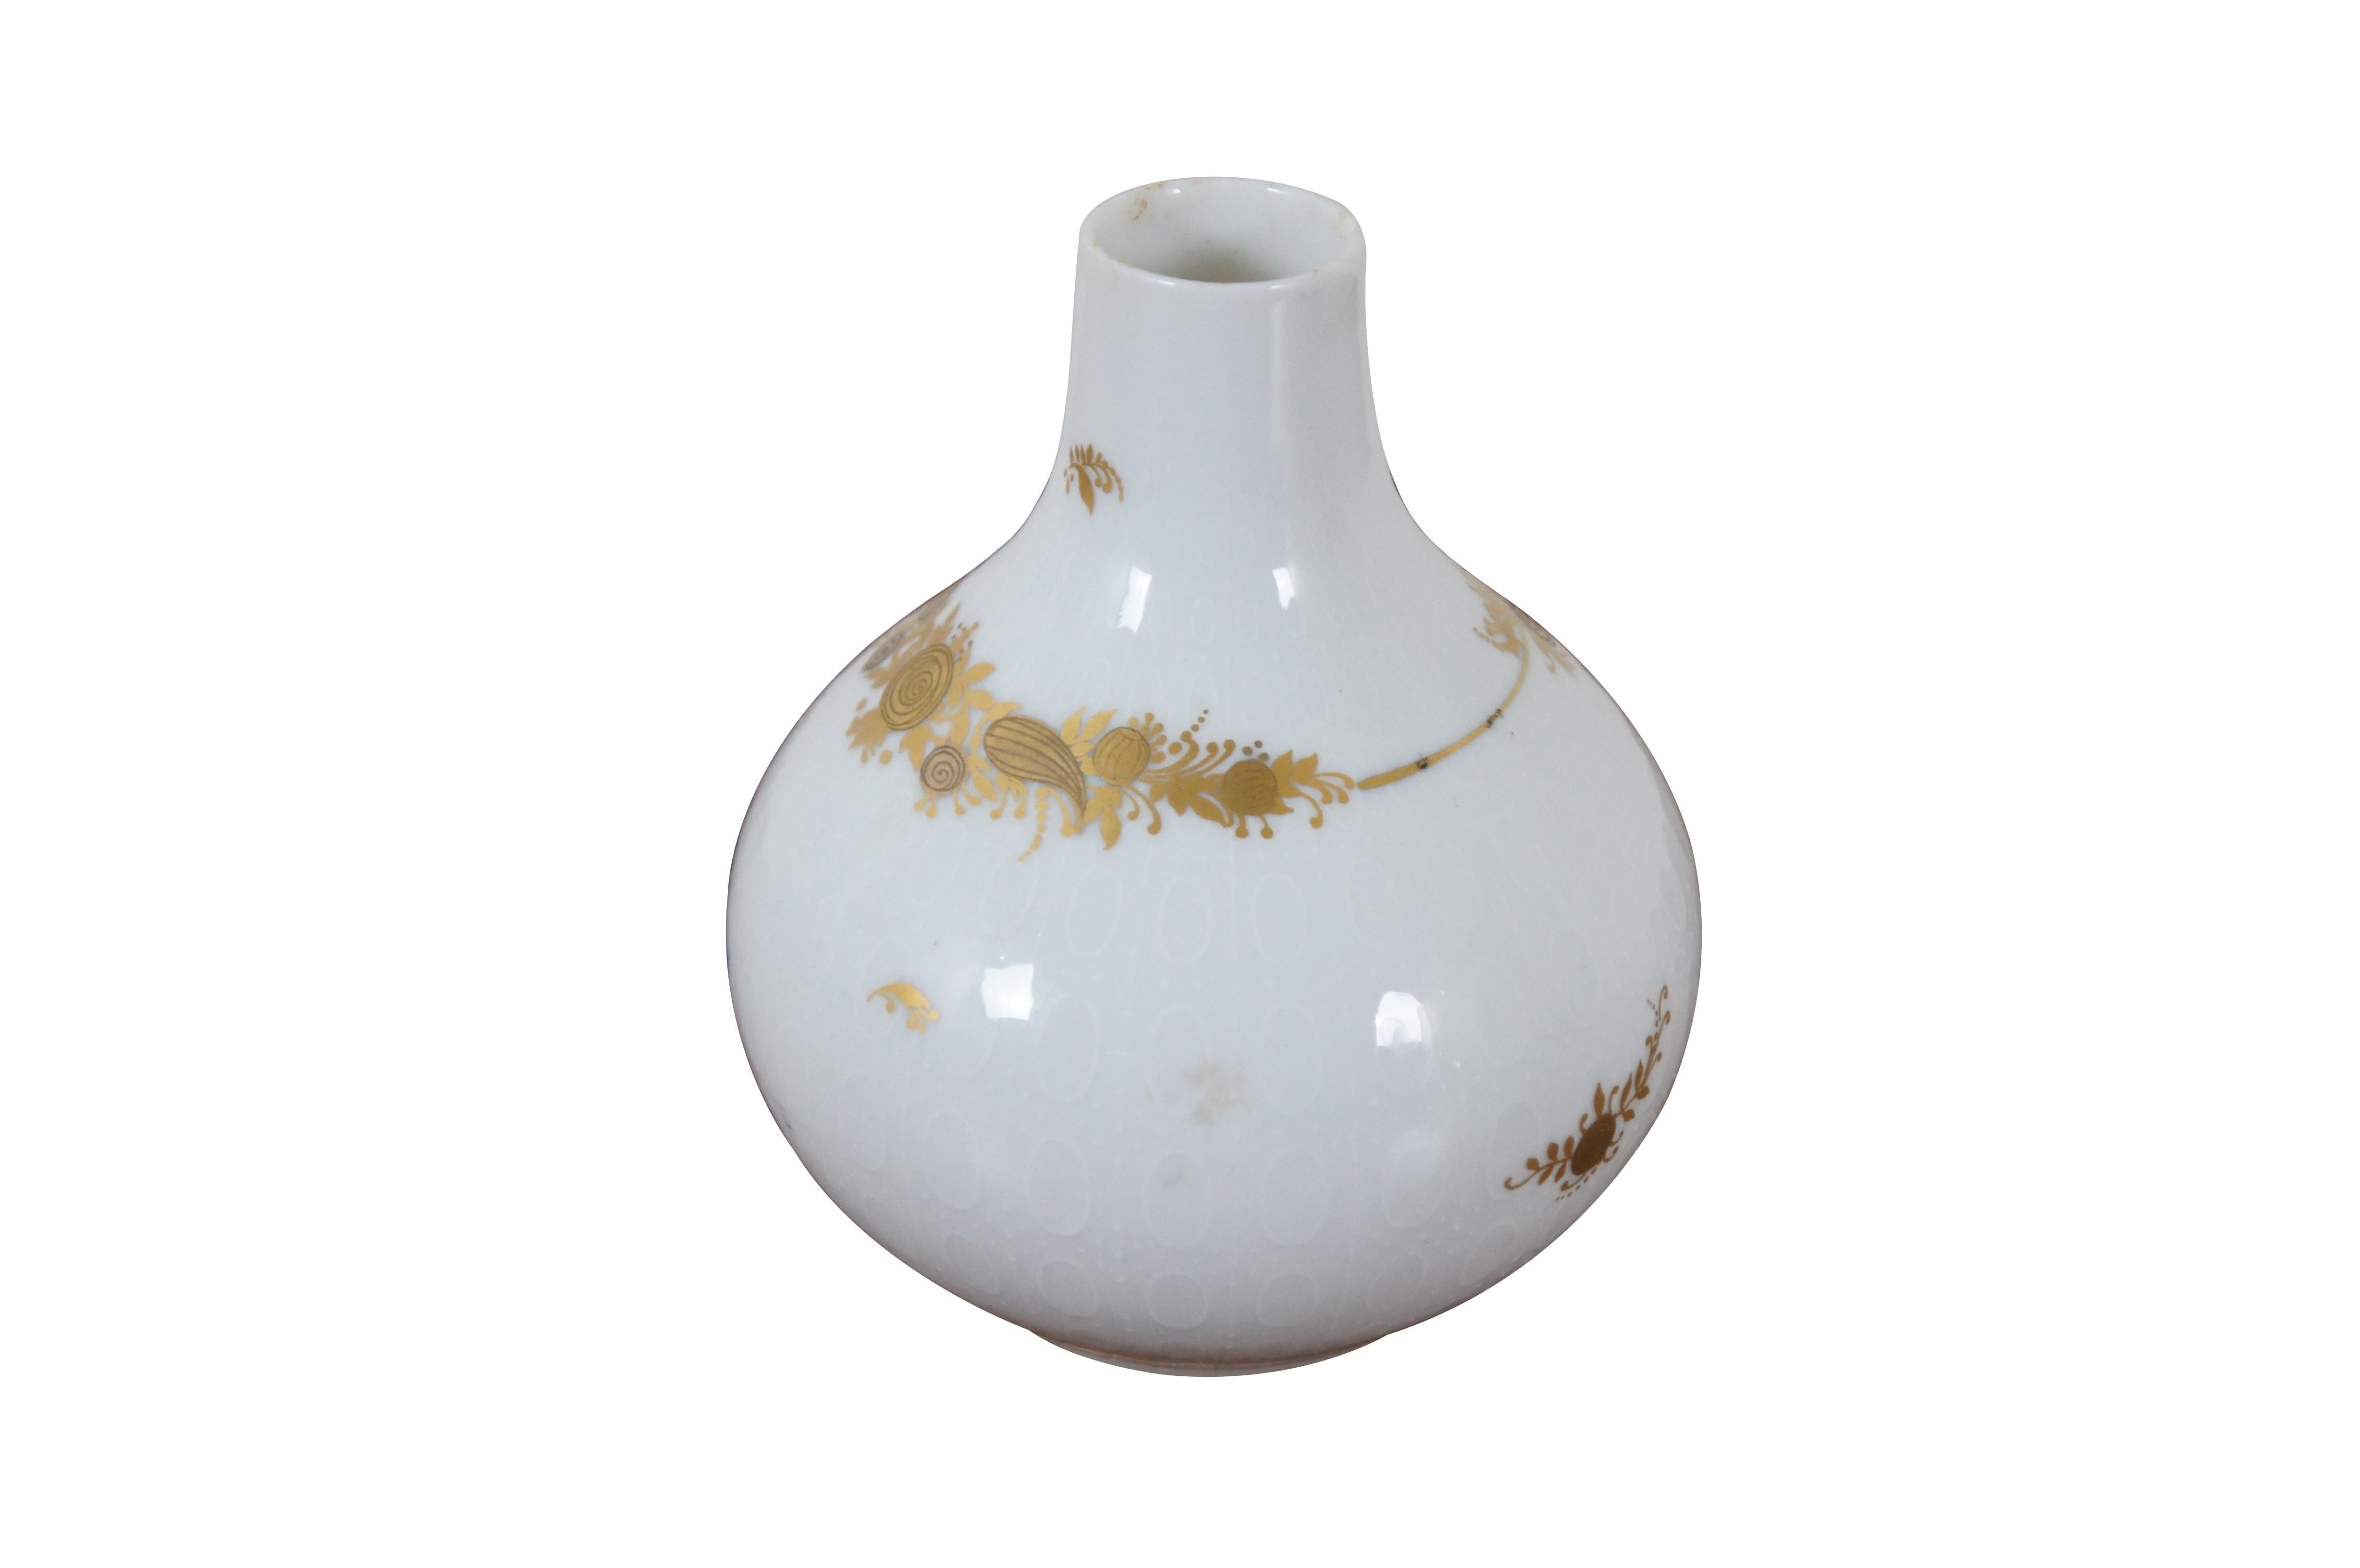 Mid century German Rosenthal porcelain form romanze Bjorn Wiinbald design bud vase, 3621.

Dimensions:
4